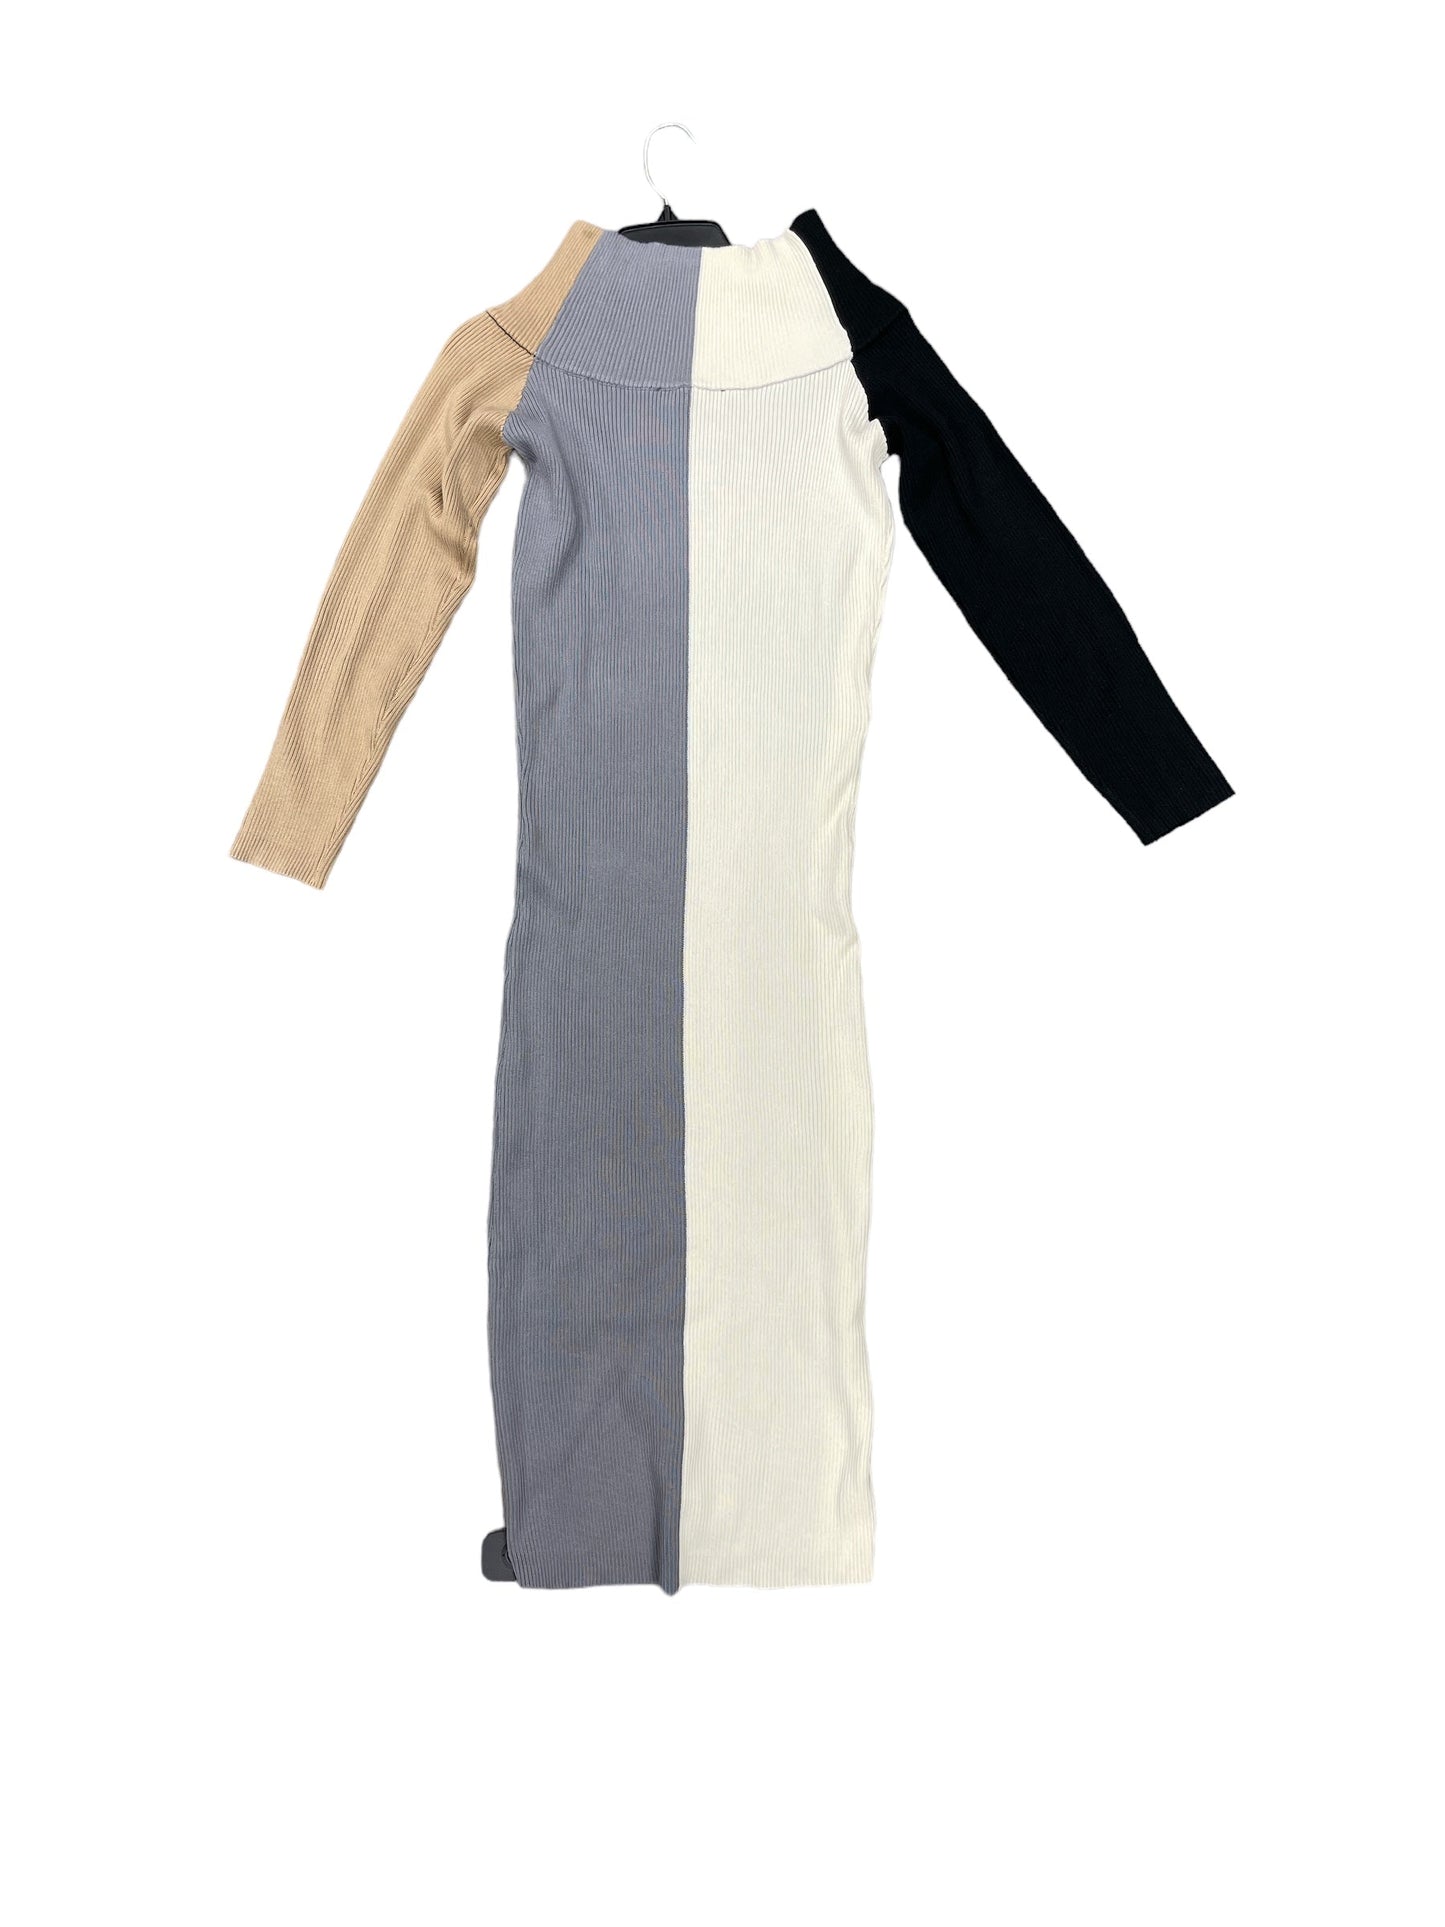 Dress Casual Maxi By Ashley Stewart  Size: 18